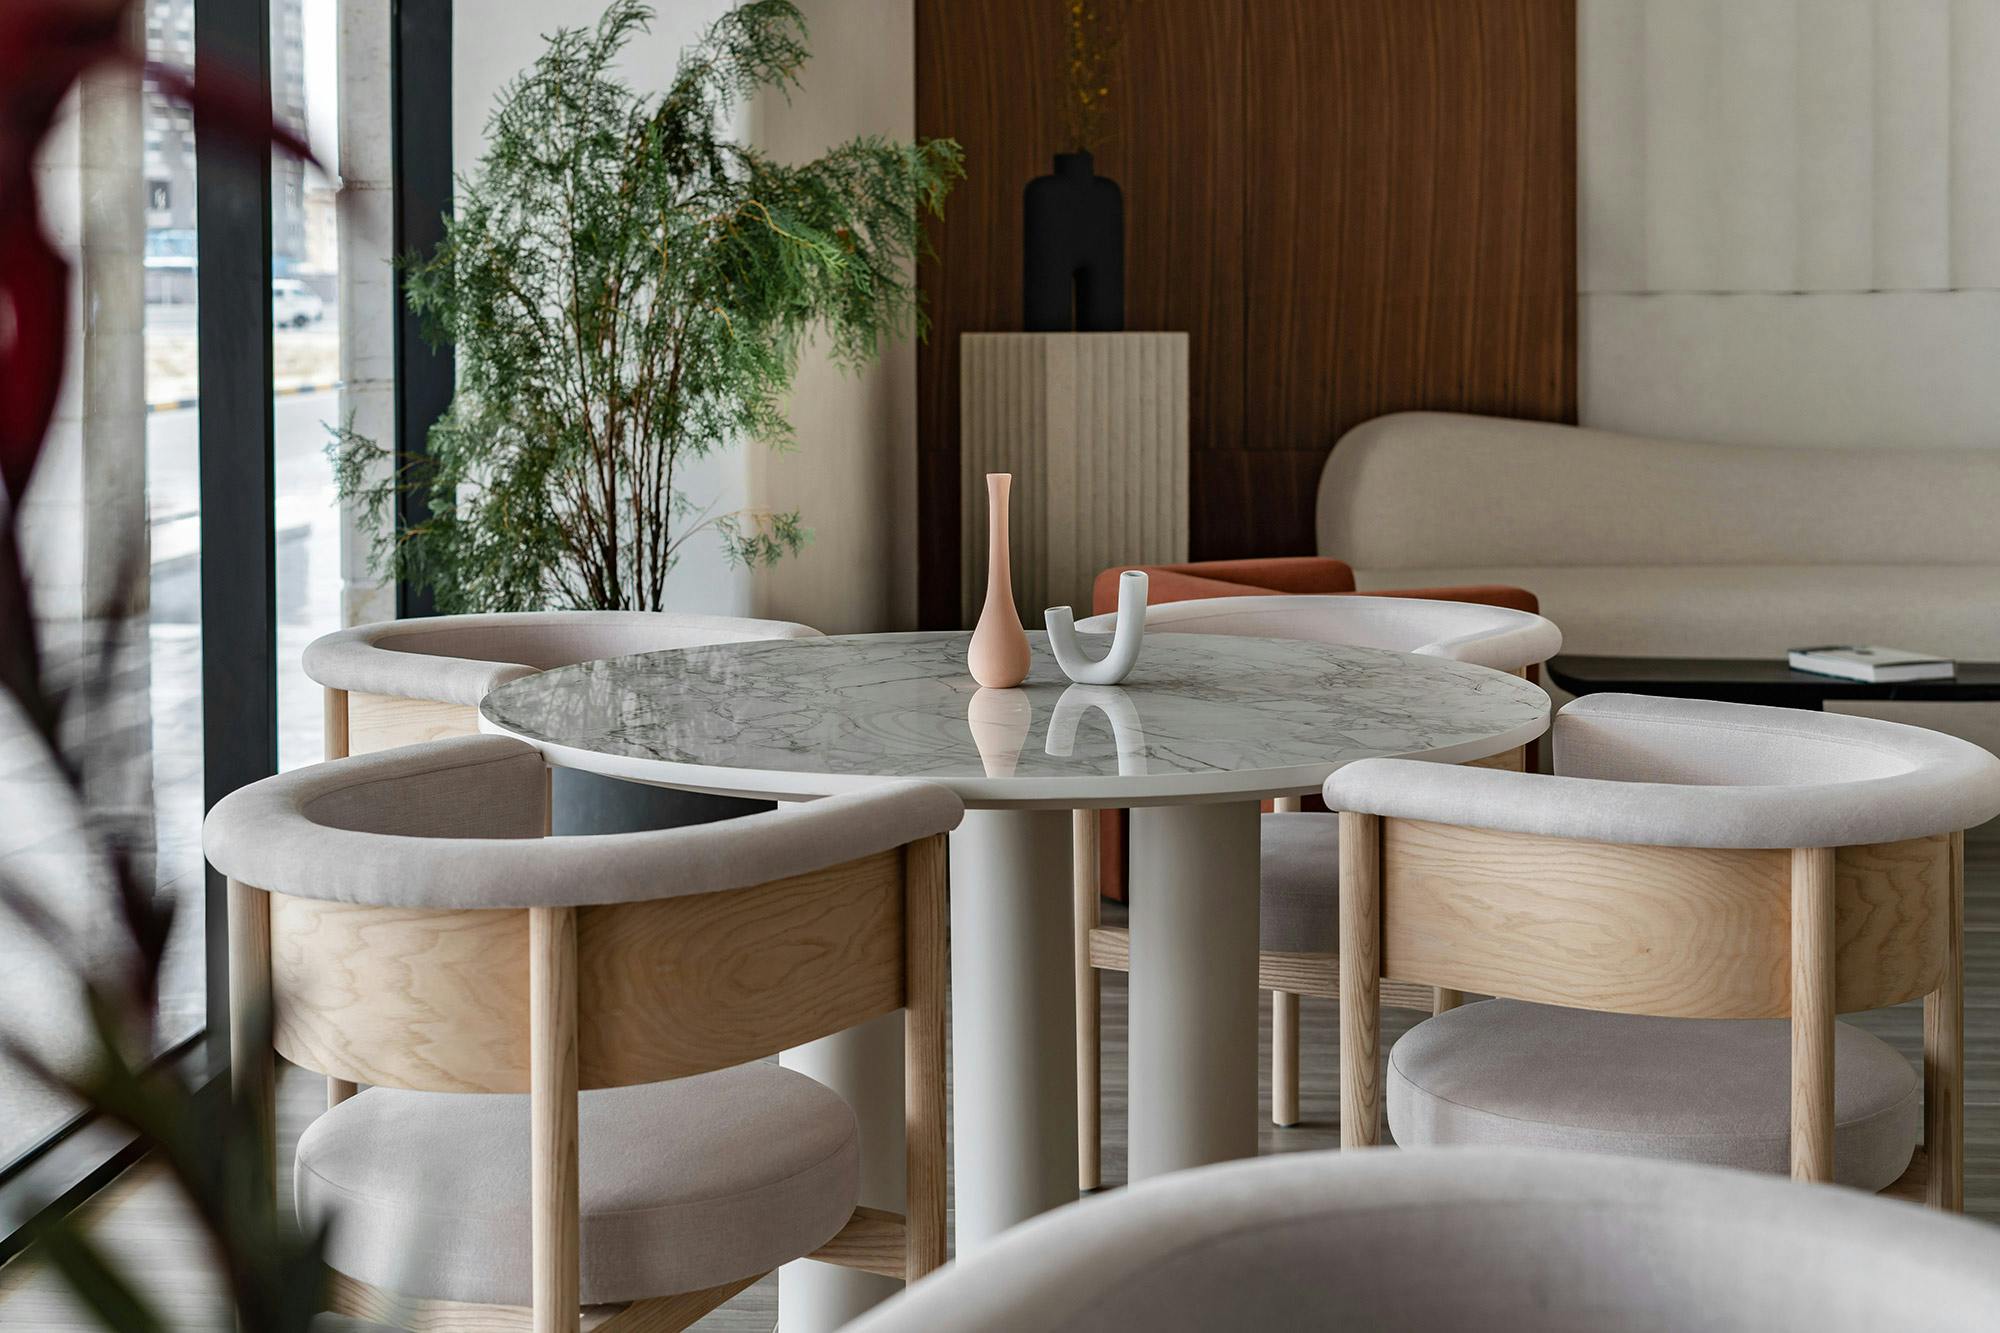 Imagem número 10 da actual secção de Tables with Dekton Bergen for coffee lovers in a cozy Emirati space da Cosentino Portugal